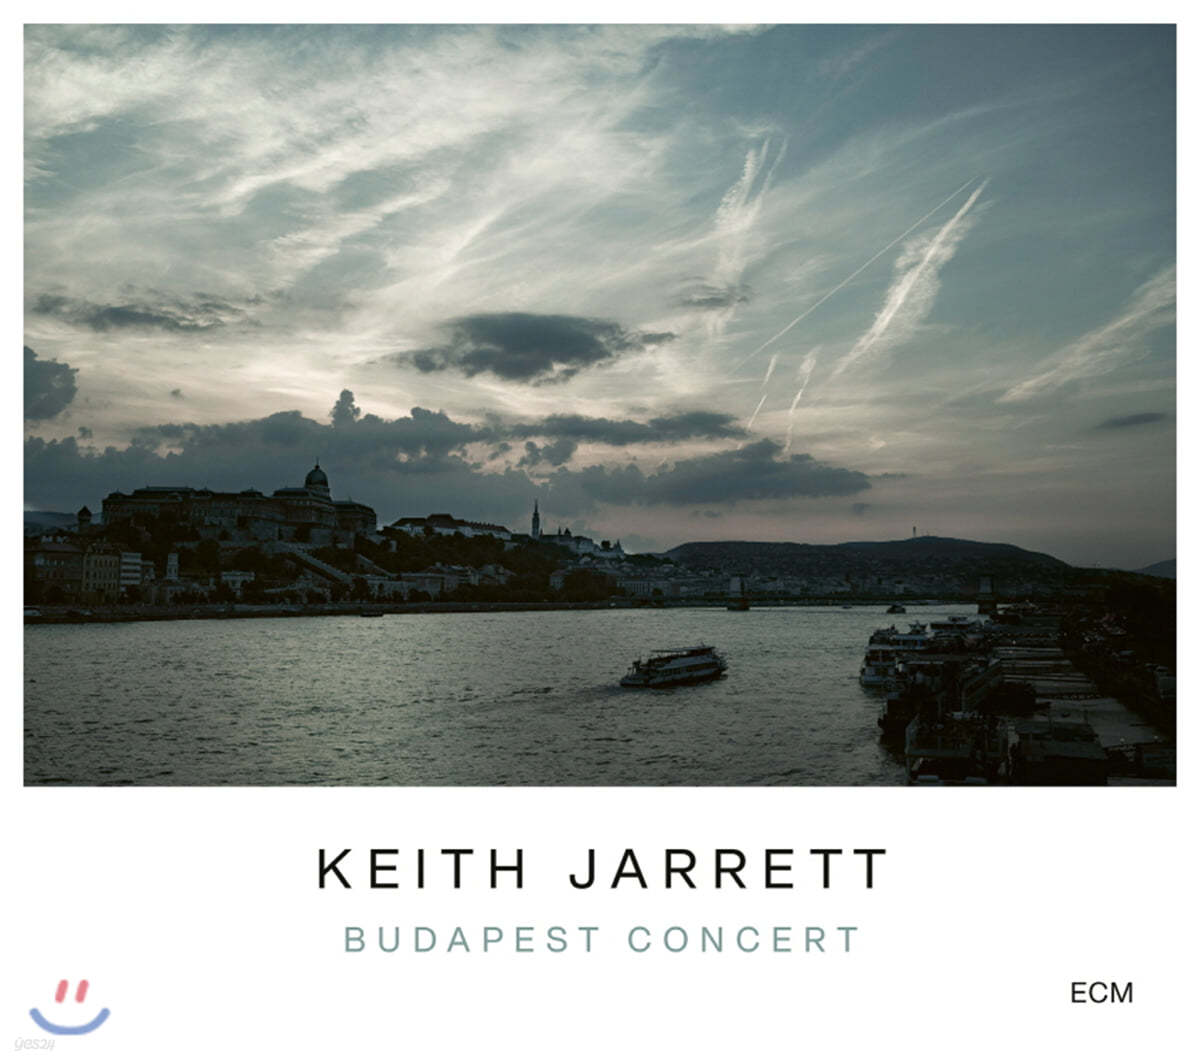 Keith Jarrett - Budapest Concert 키스 자렛 2016년 헝가리 부다페스트 콘서트 